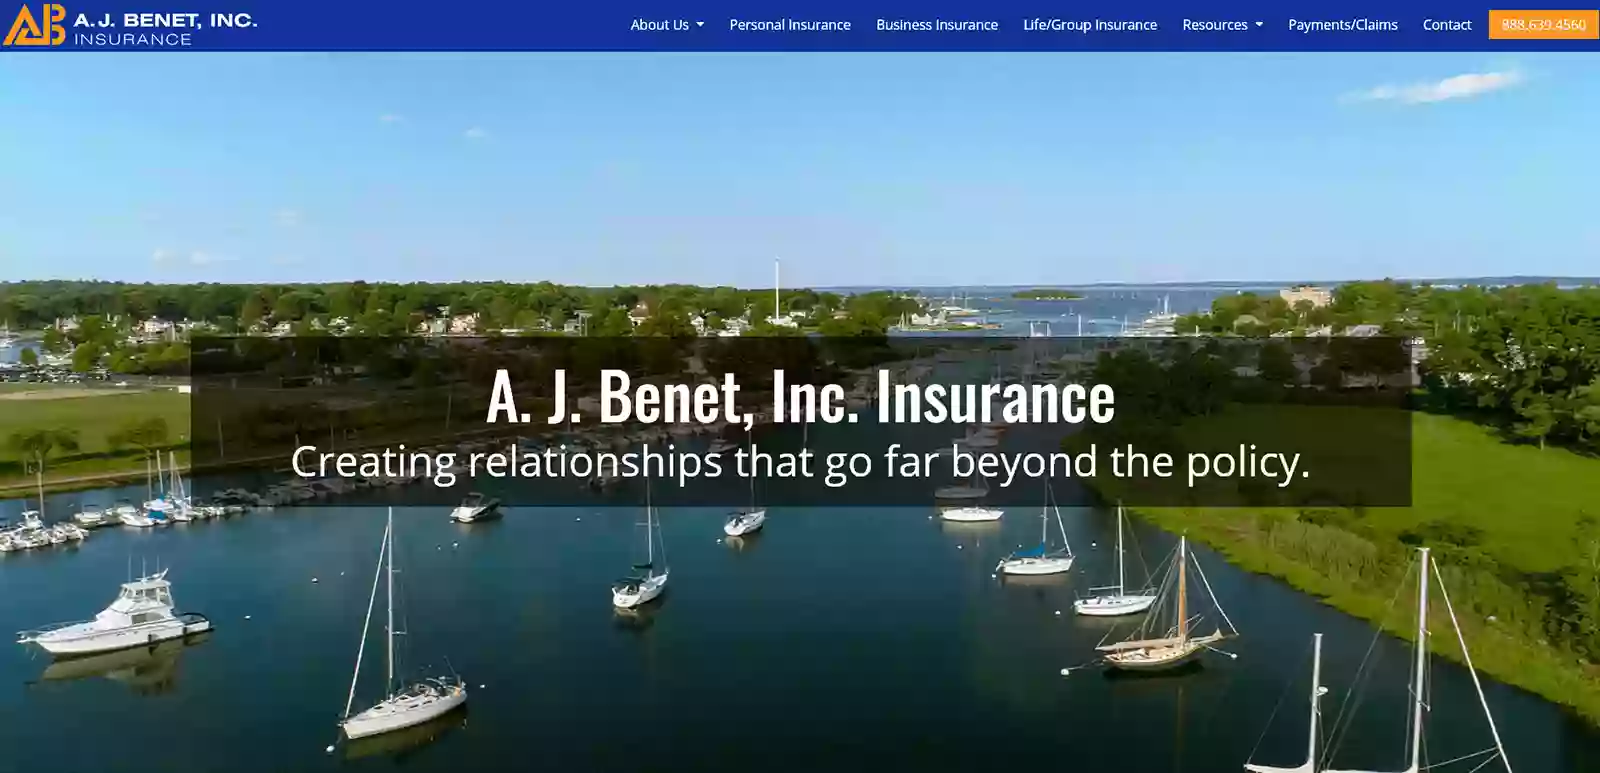 A.J. Benet, Inc. Insurance